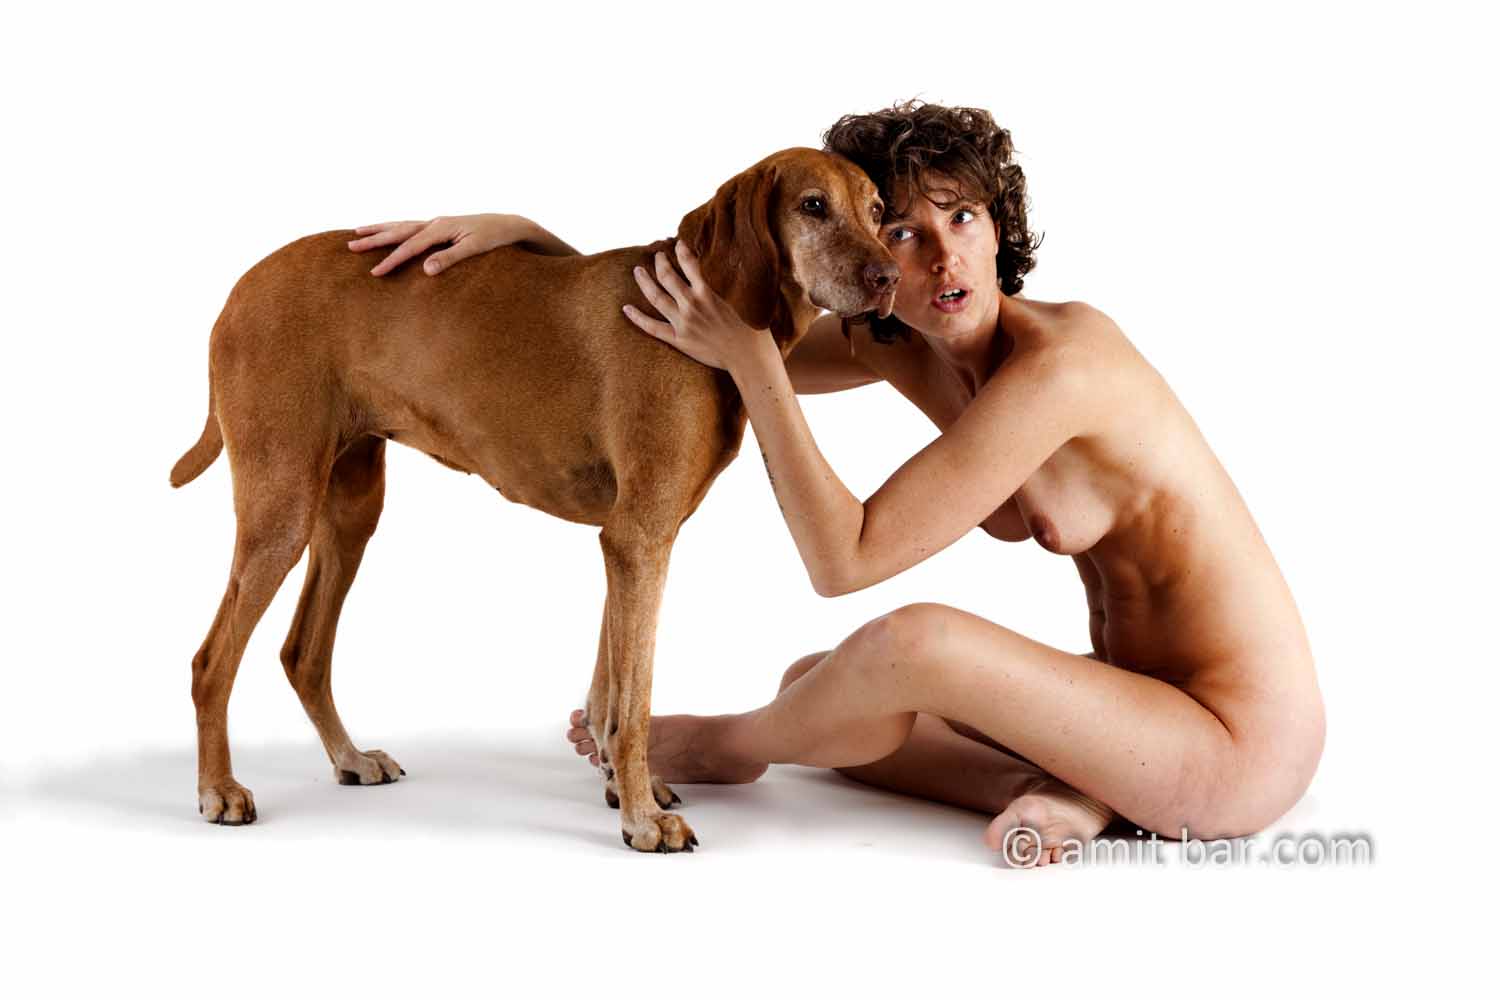 Brown dog: Nude model with brown Viszla dog